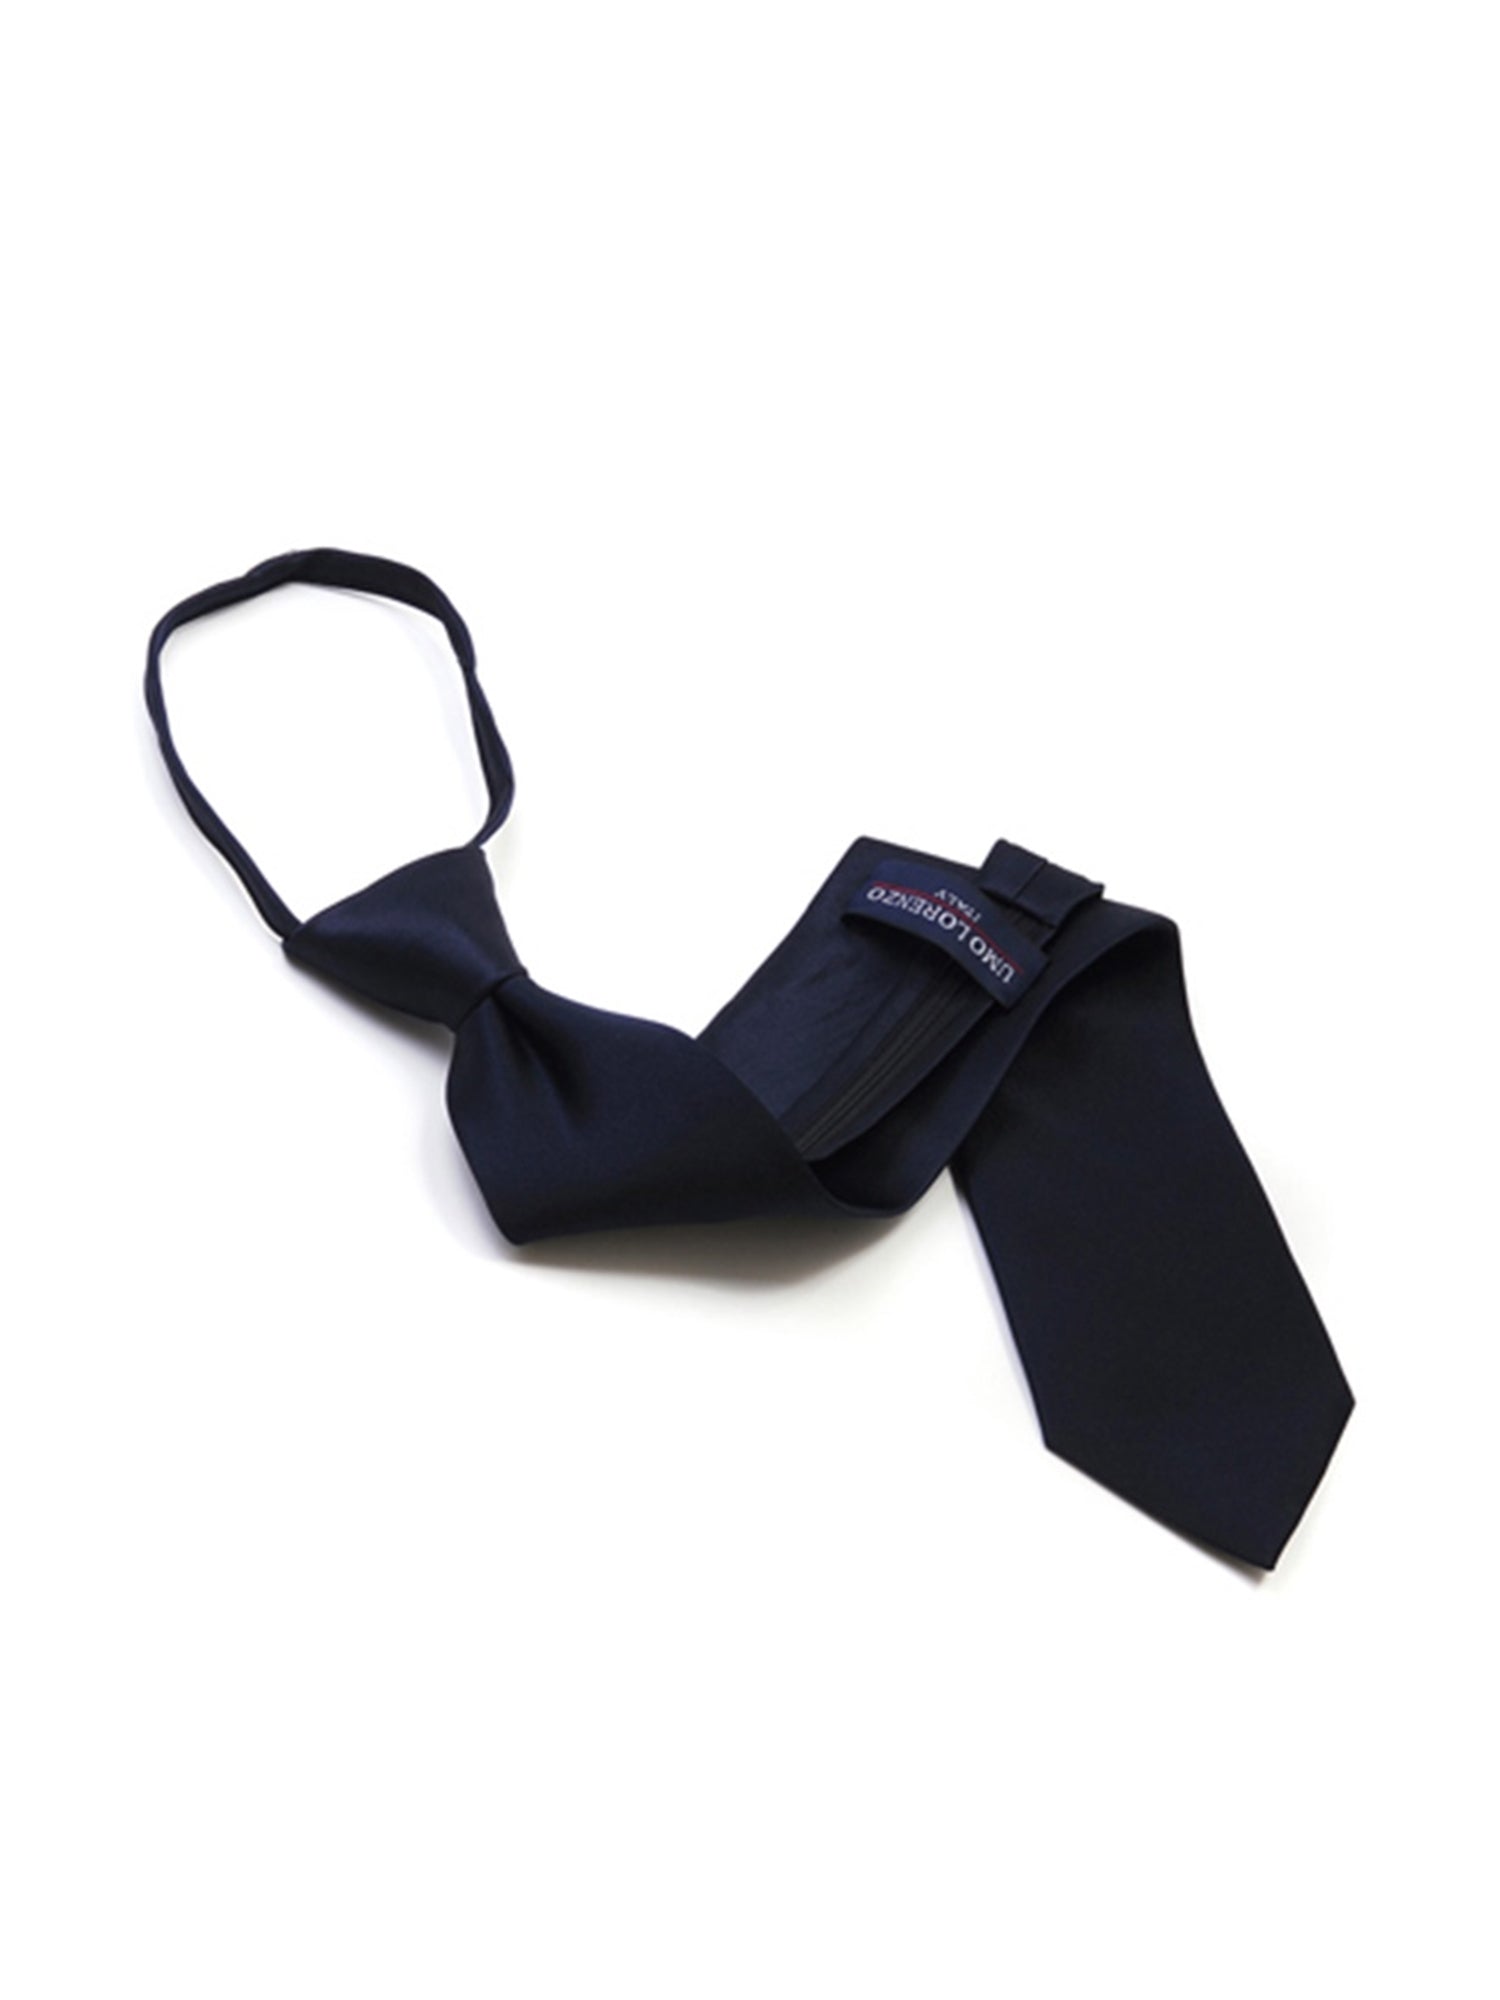 Men's Solid Color Pre-tied Zipper Neck Tie Dapper Neckwear TheDapperTie Navy One Size 